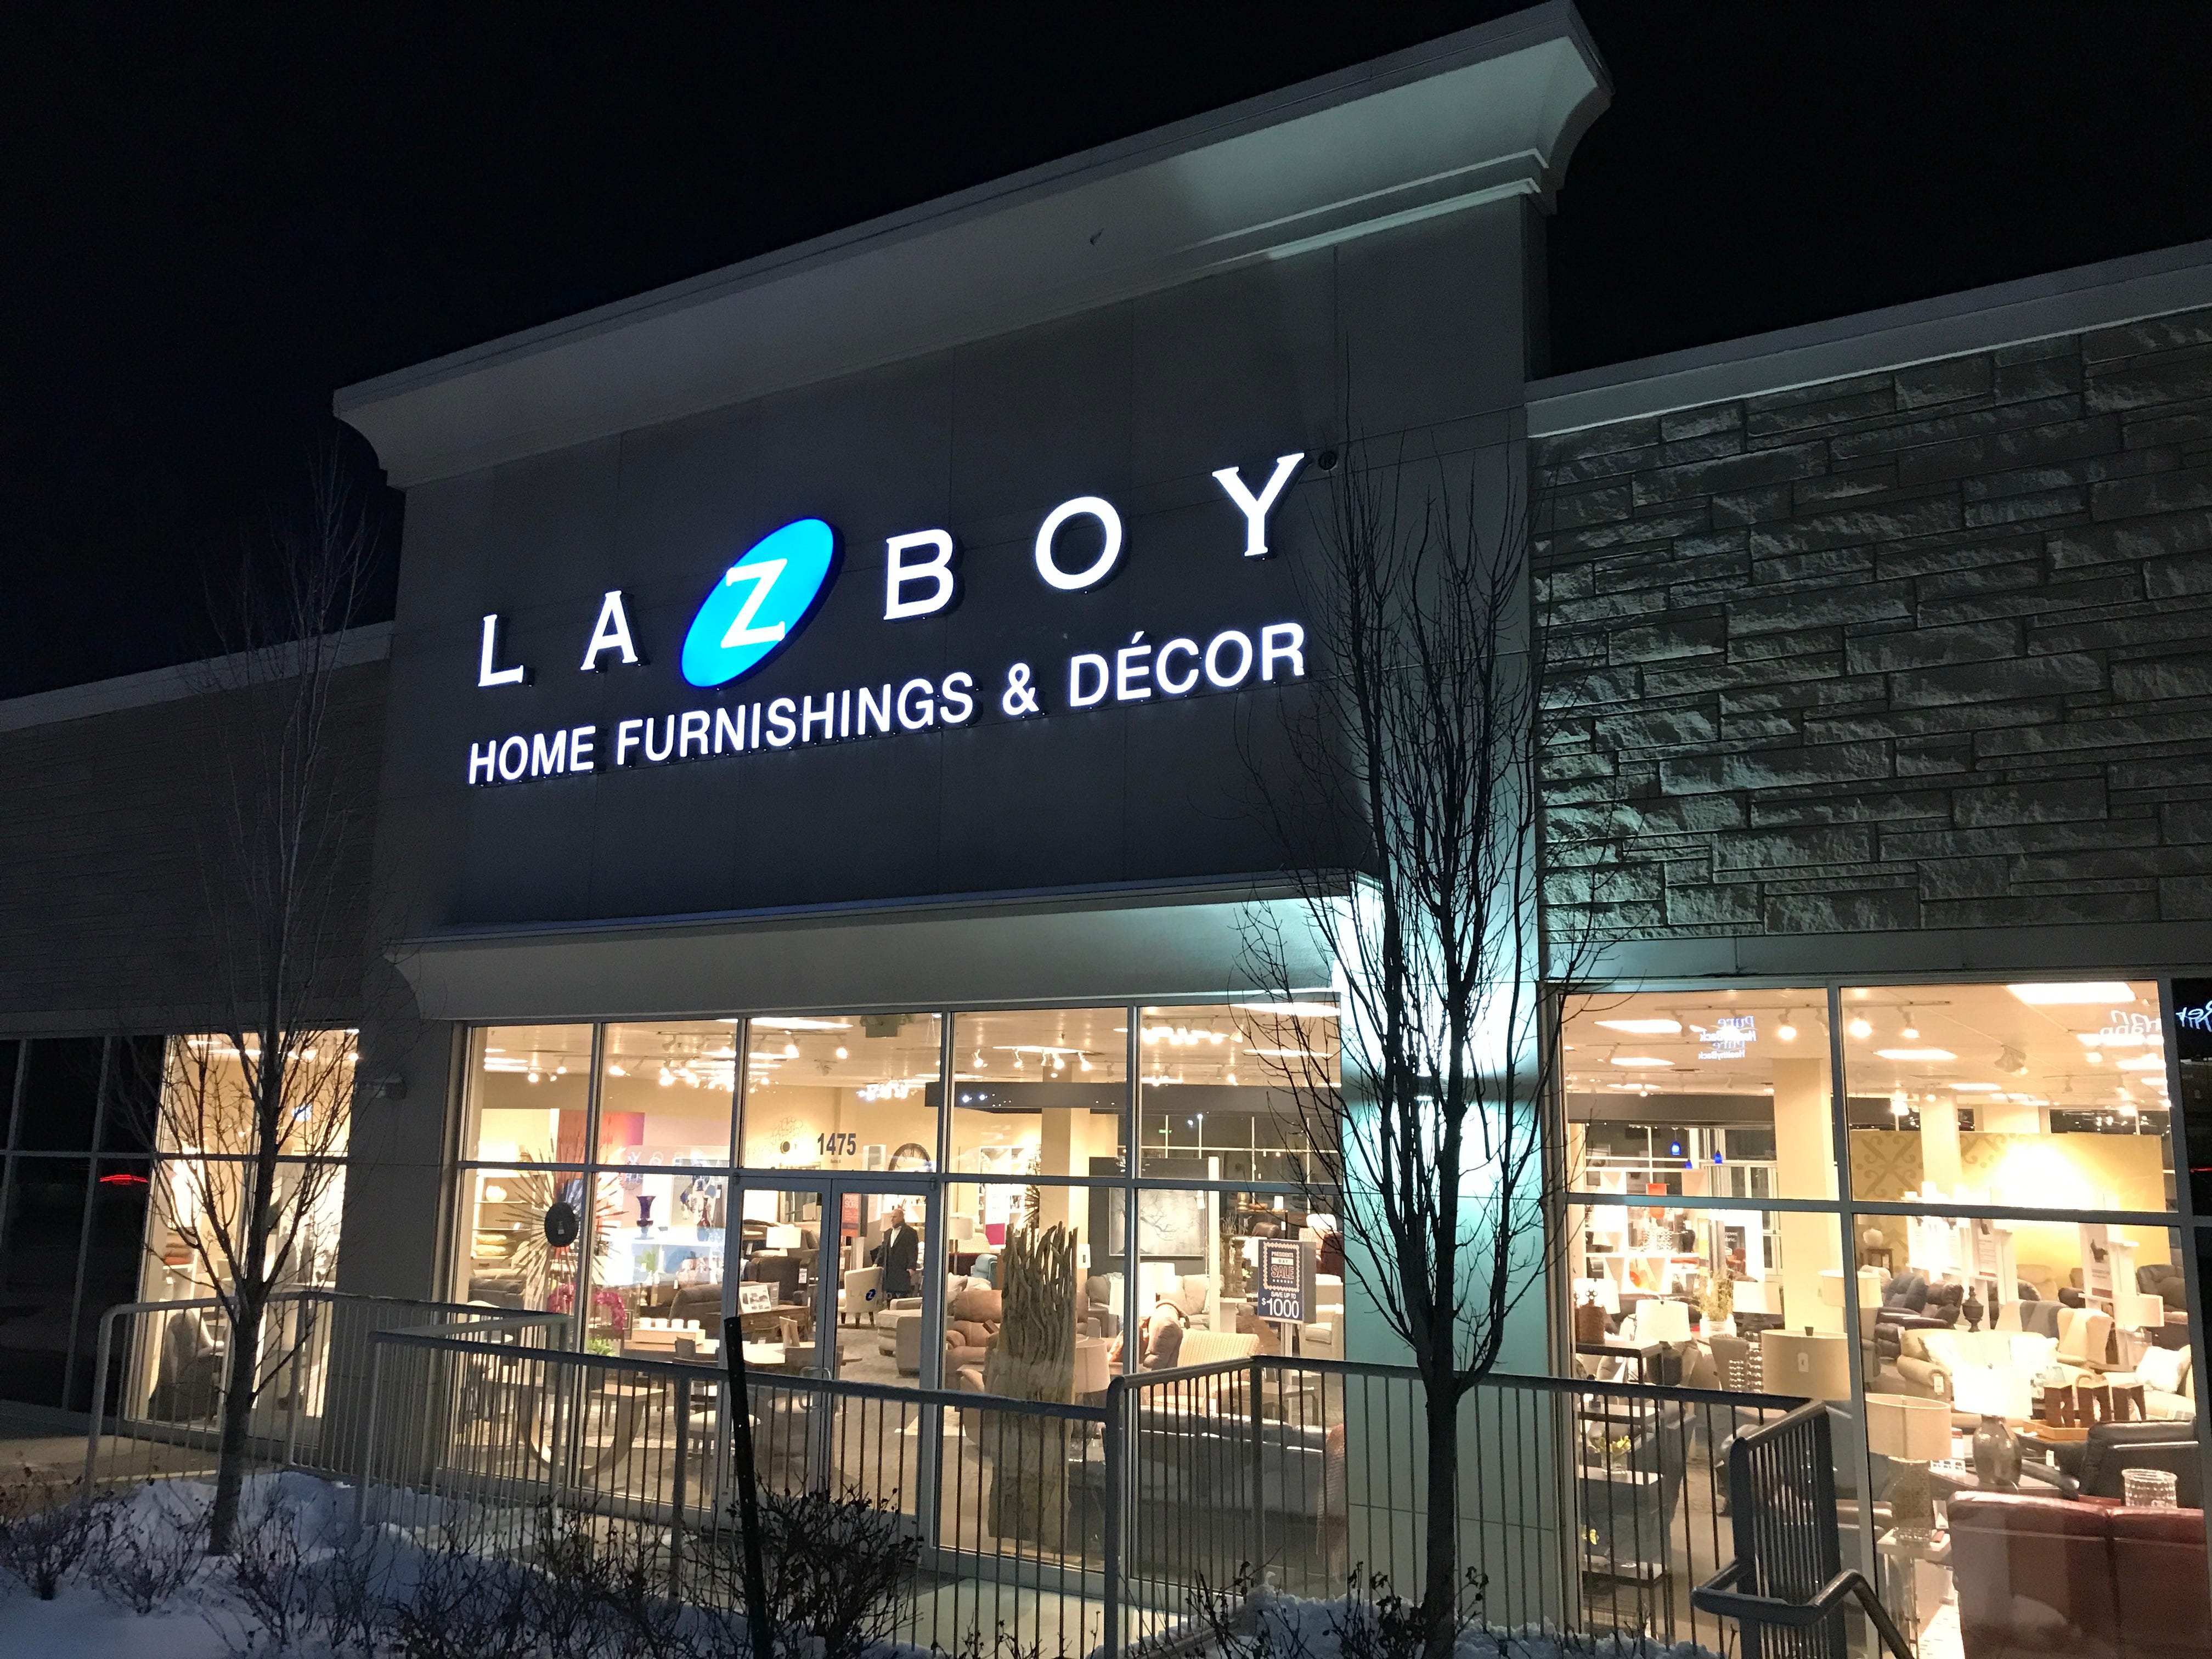 lazy boy store closing